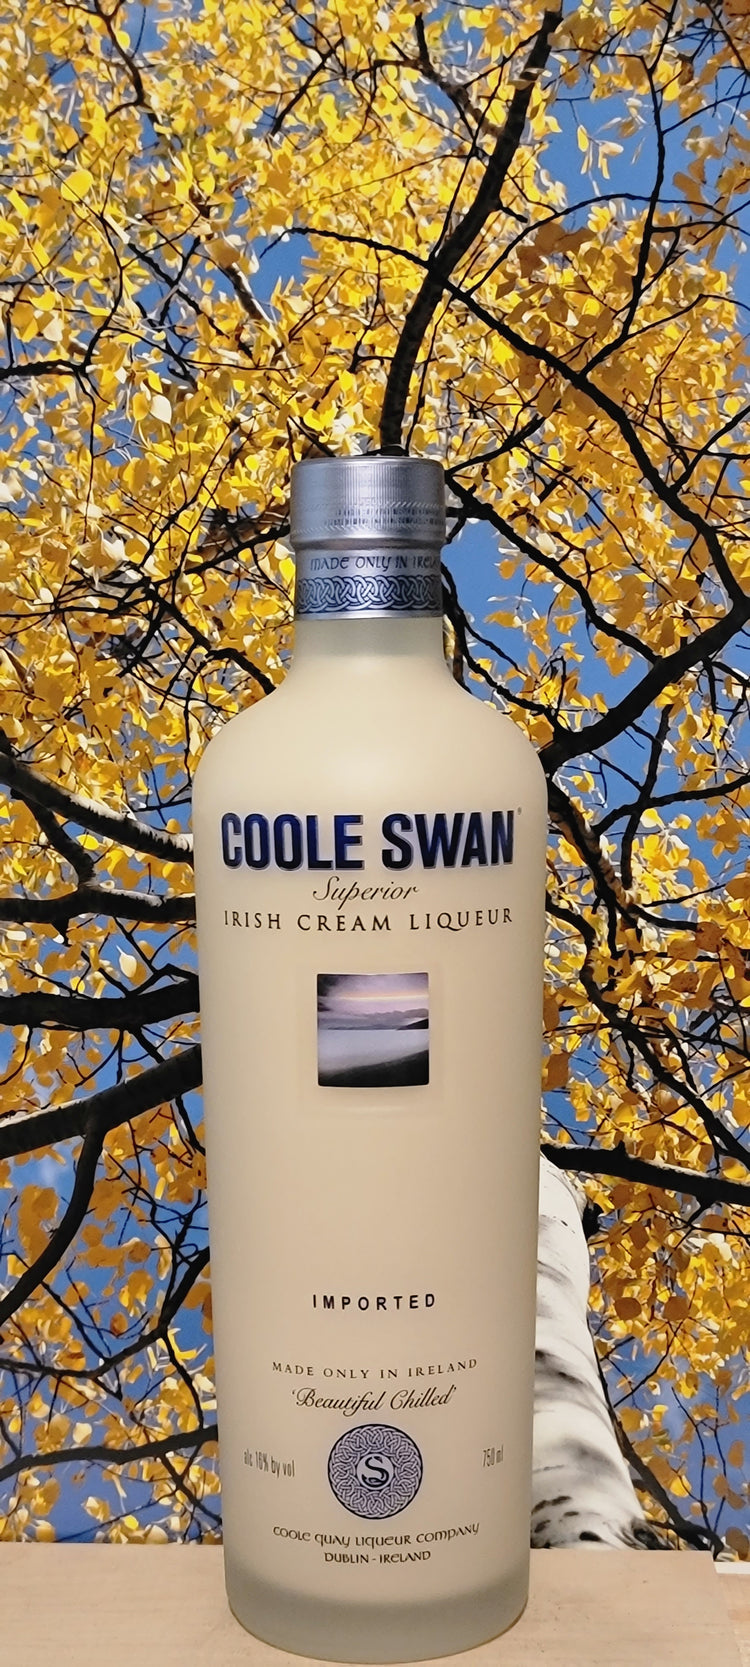 Coole swan irish cream